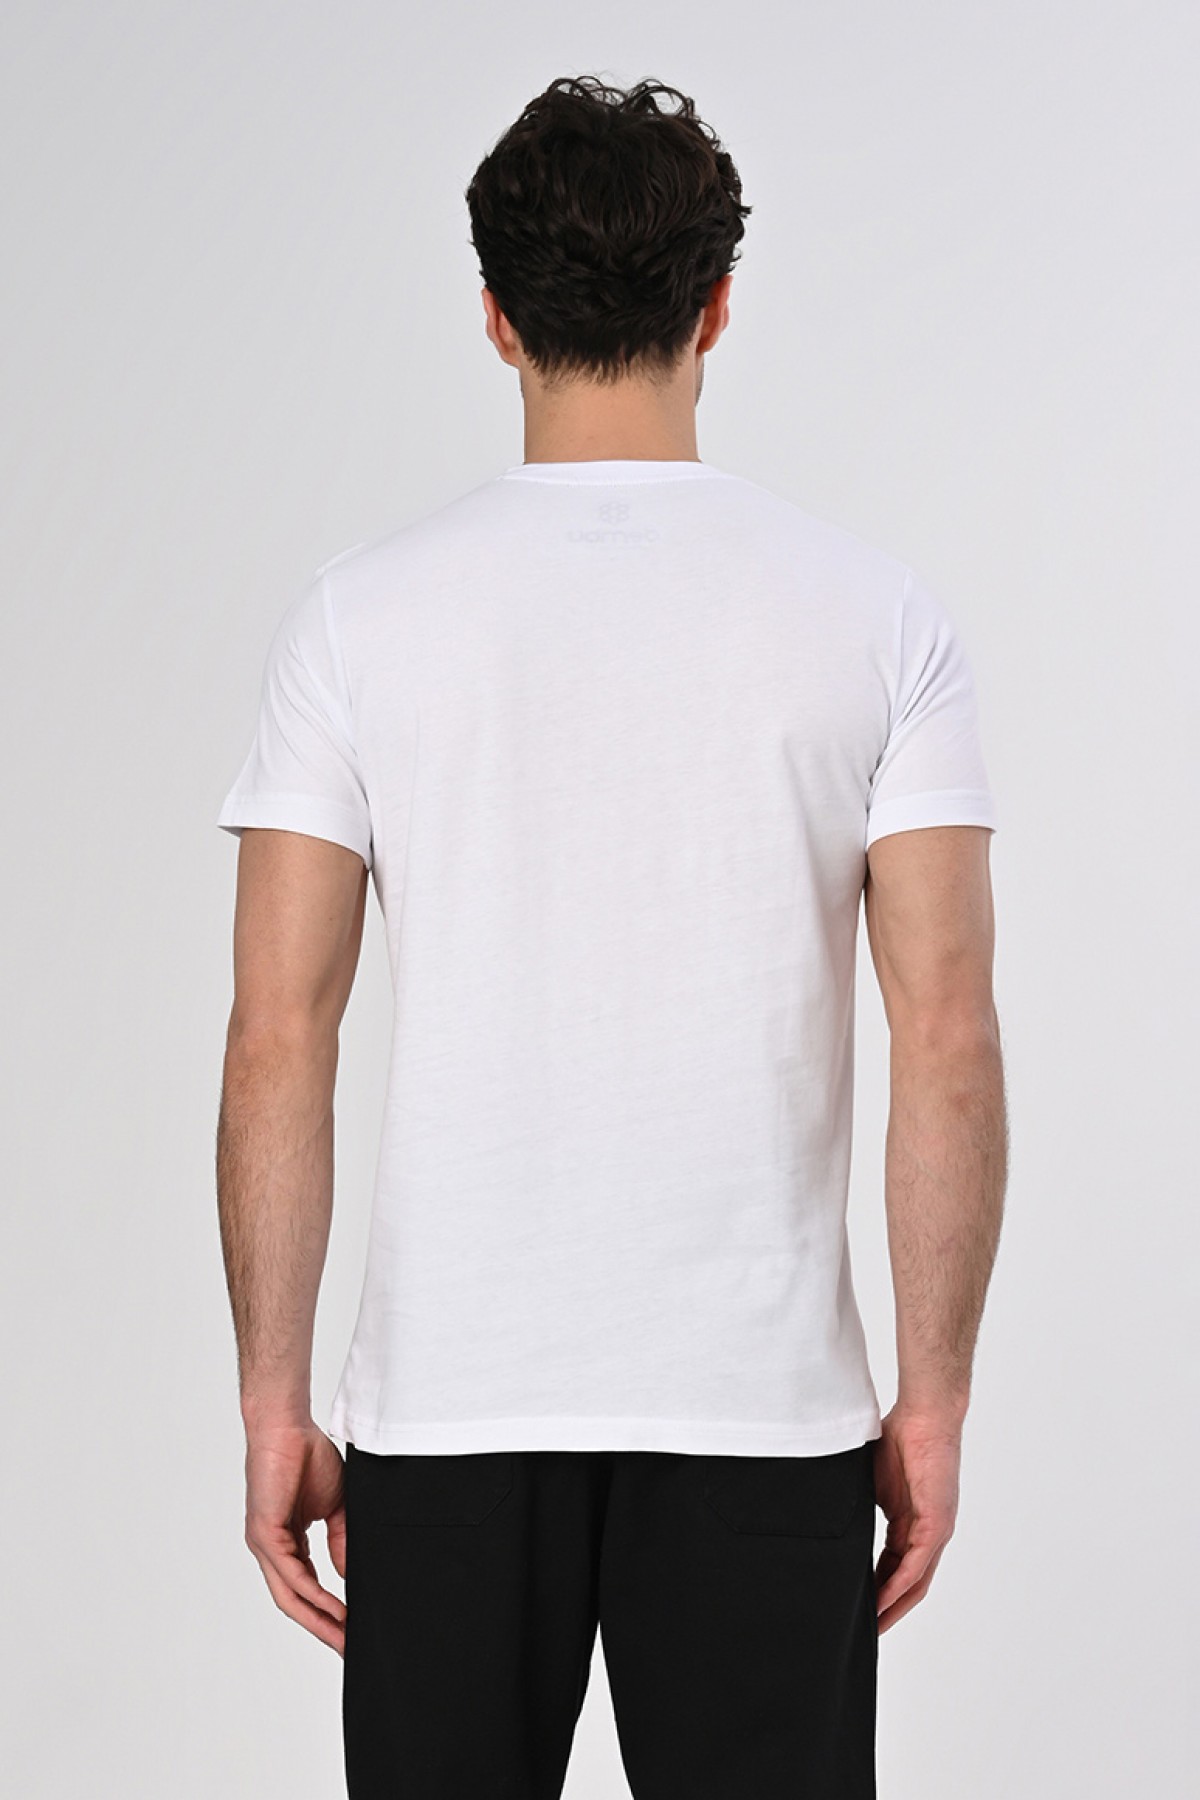 Medine Tasarım Bisiklet Yaka Beyaz Pamuk T-shirt 22’